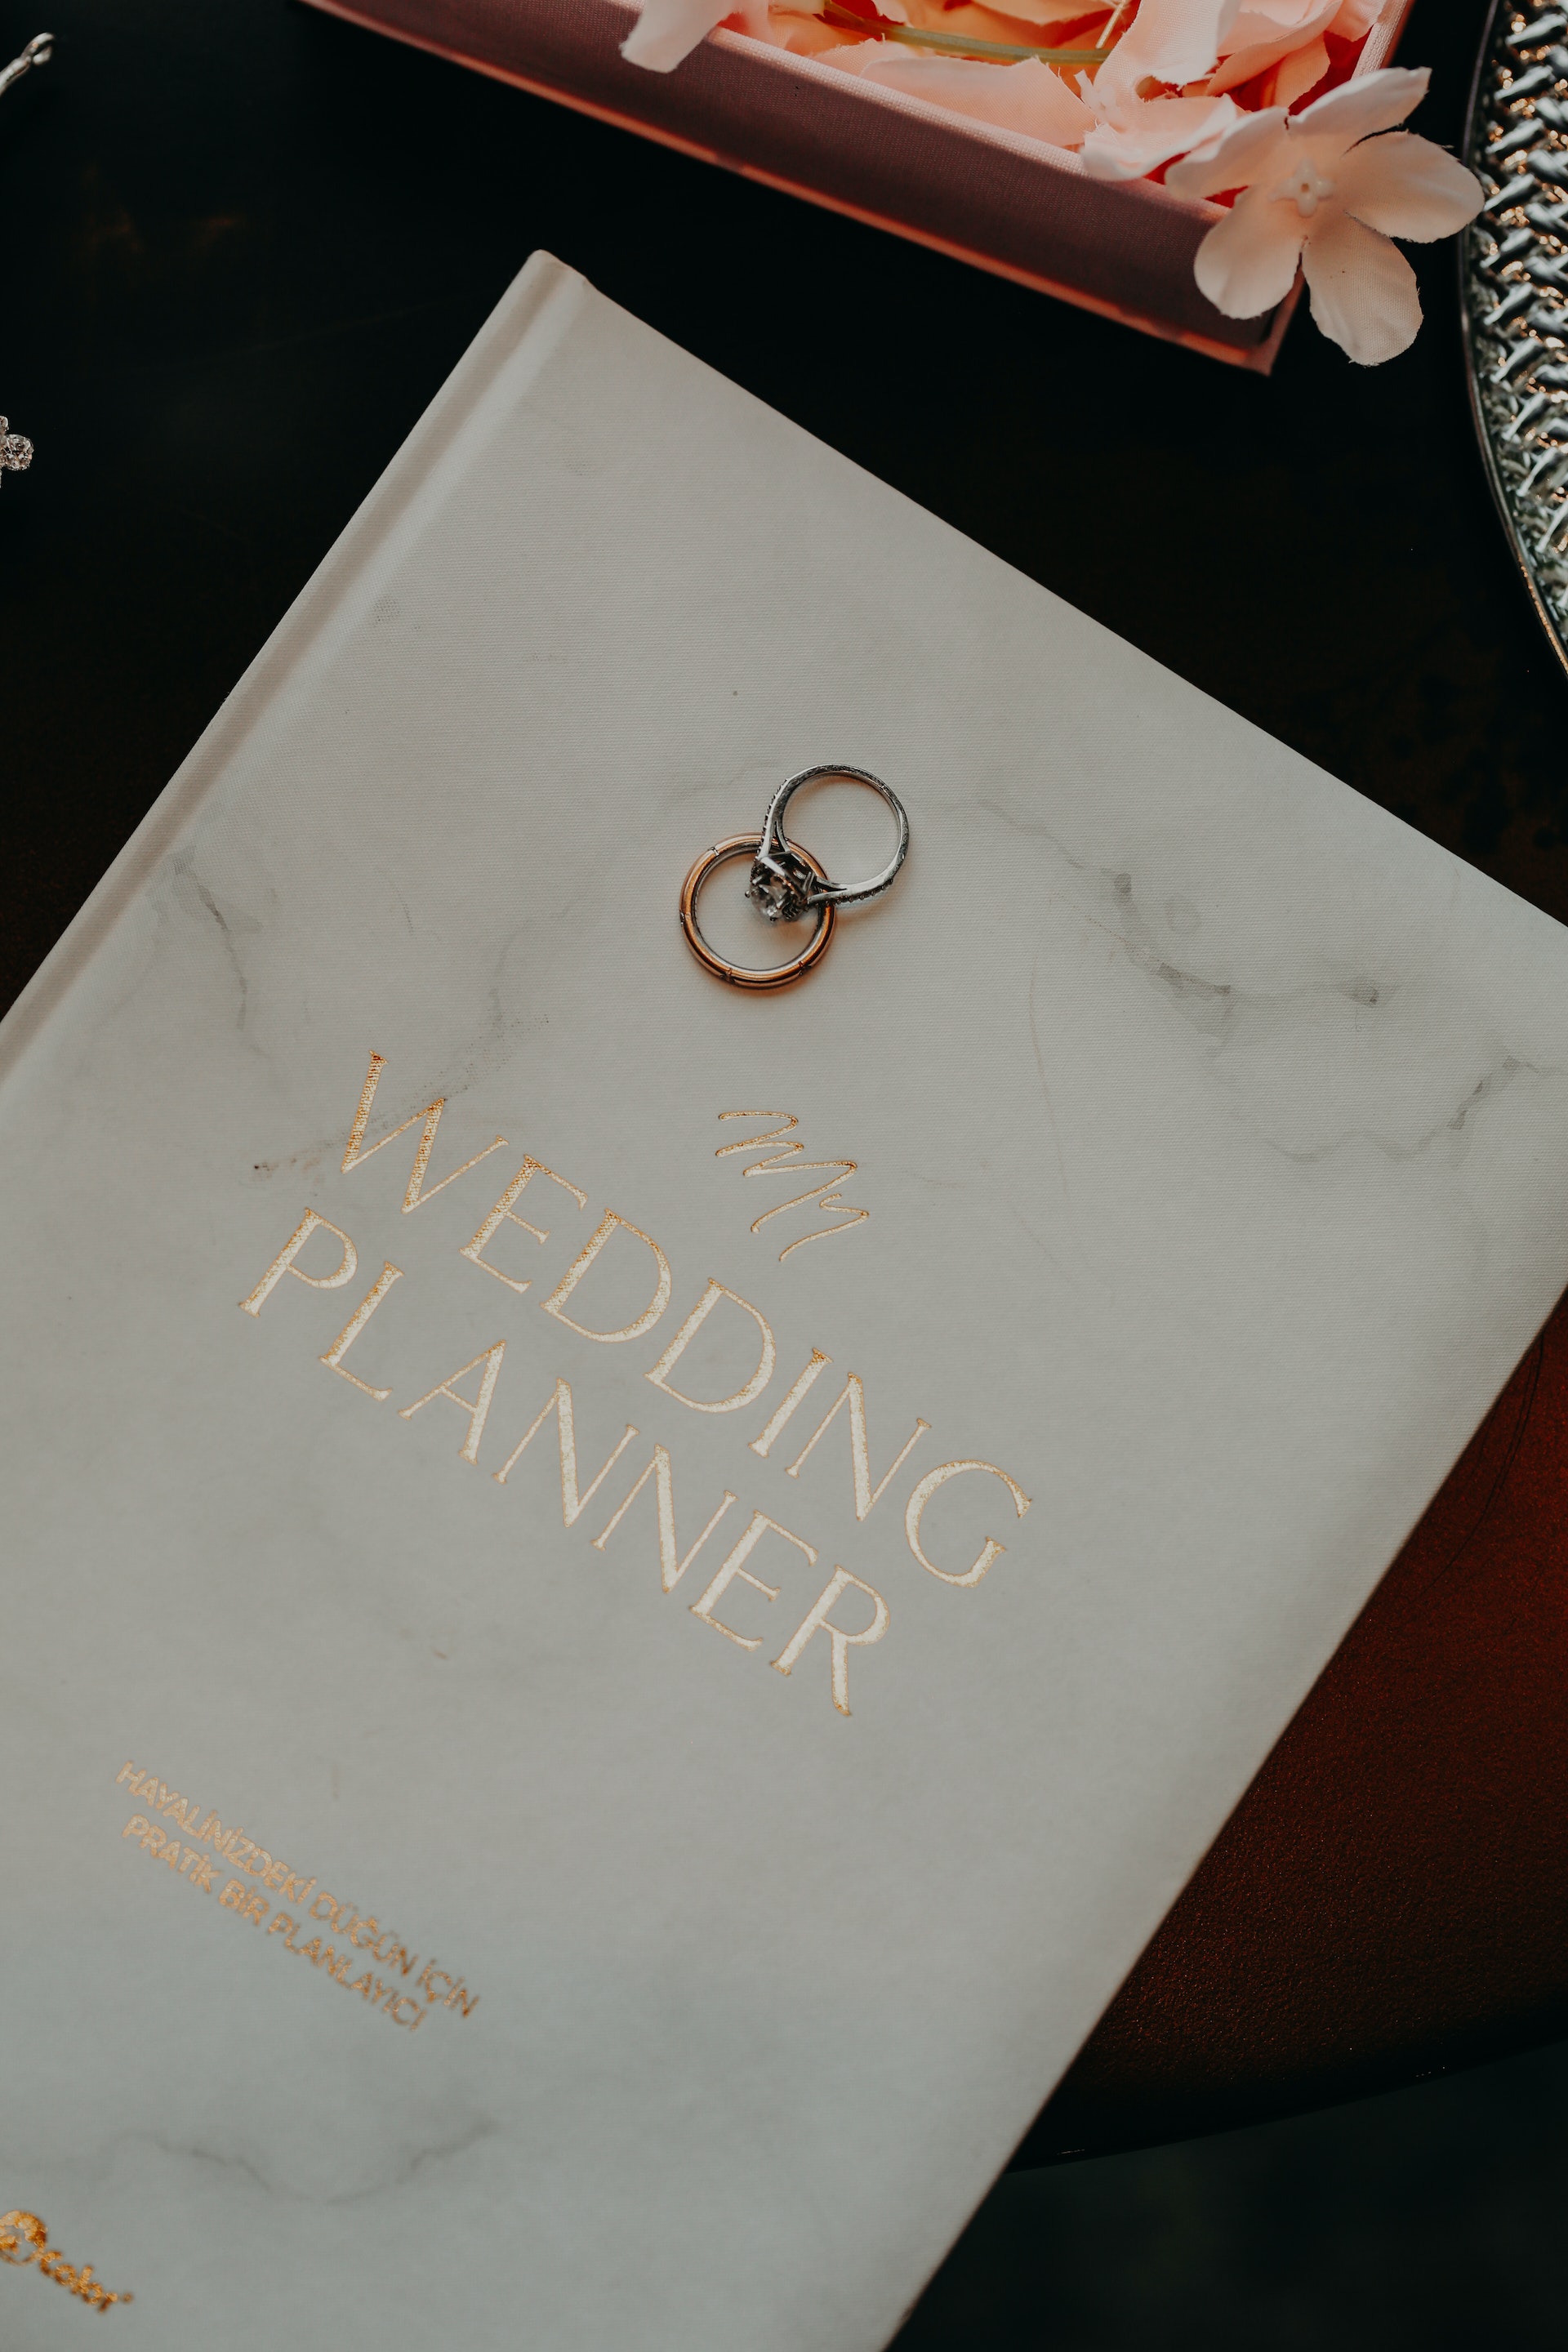 A wedding planner | Source: Pexels